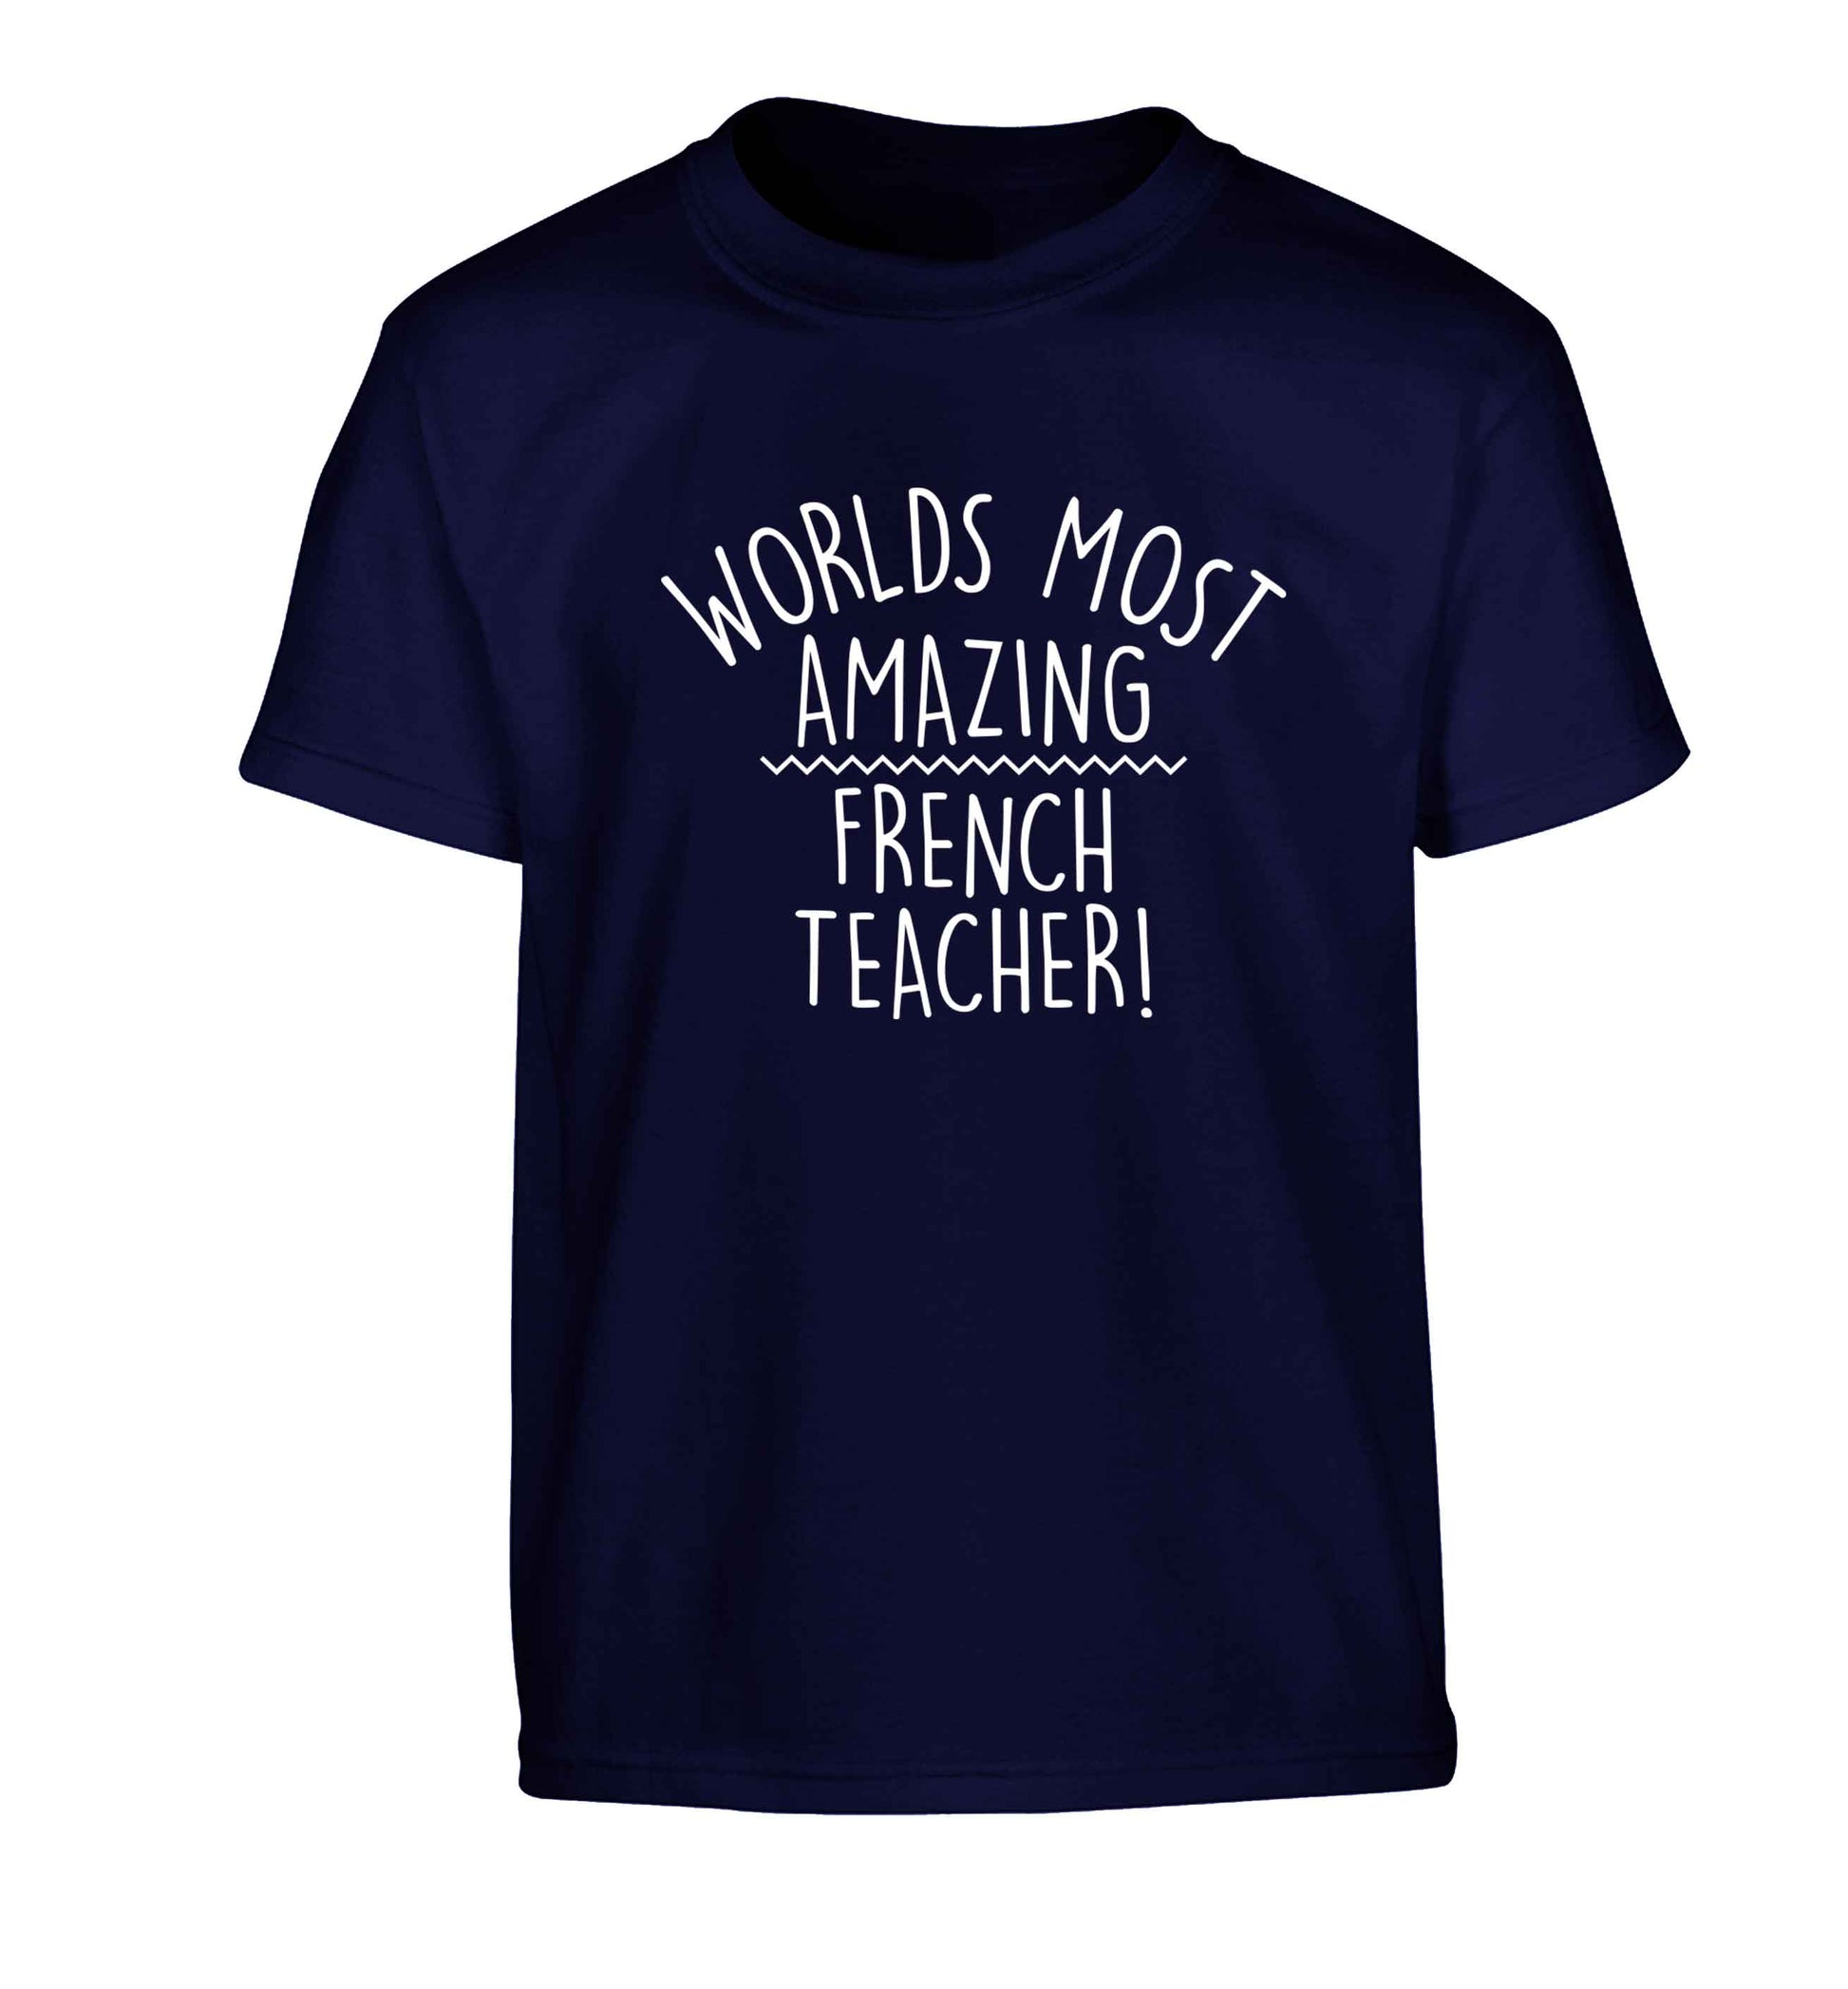 Worlds most amazing French teacher Children's navy Tshirt 12-13 Years